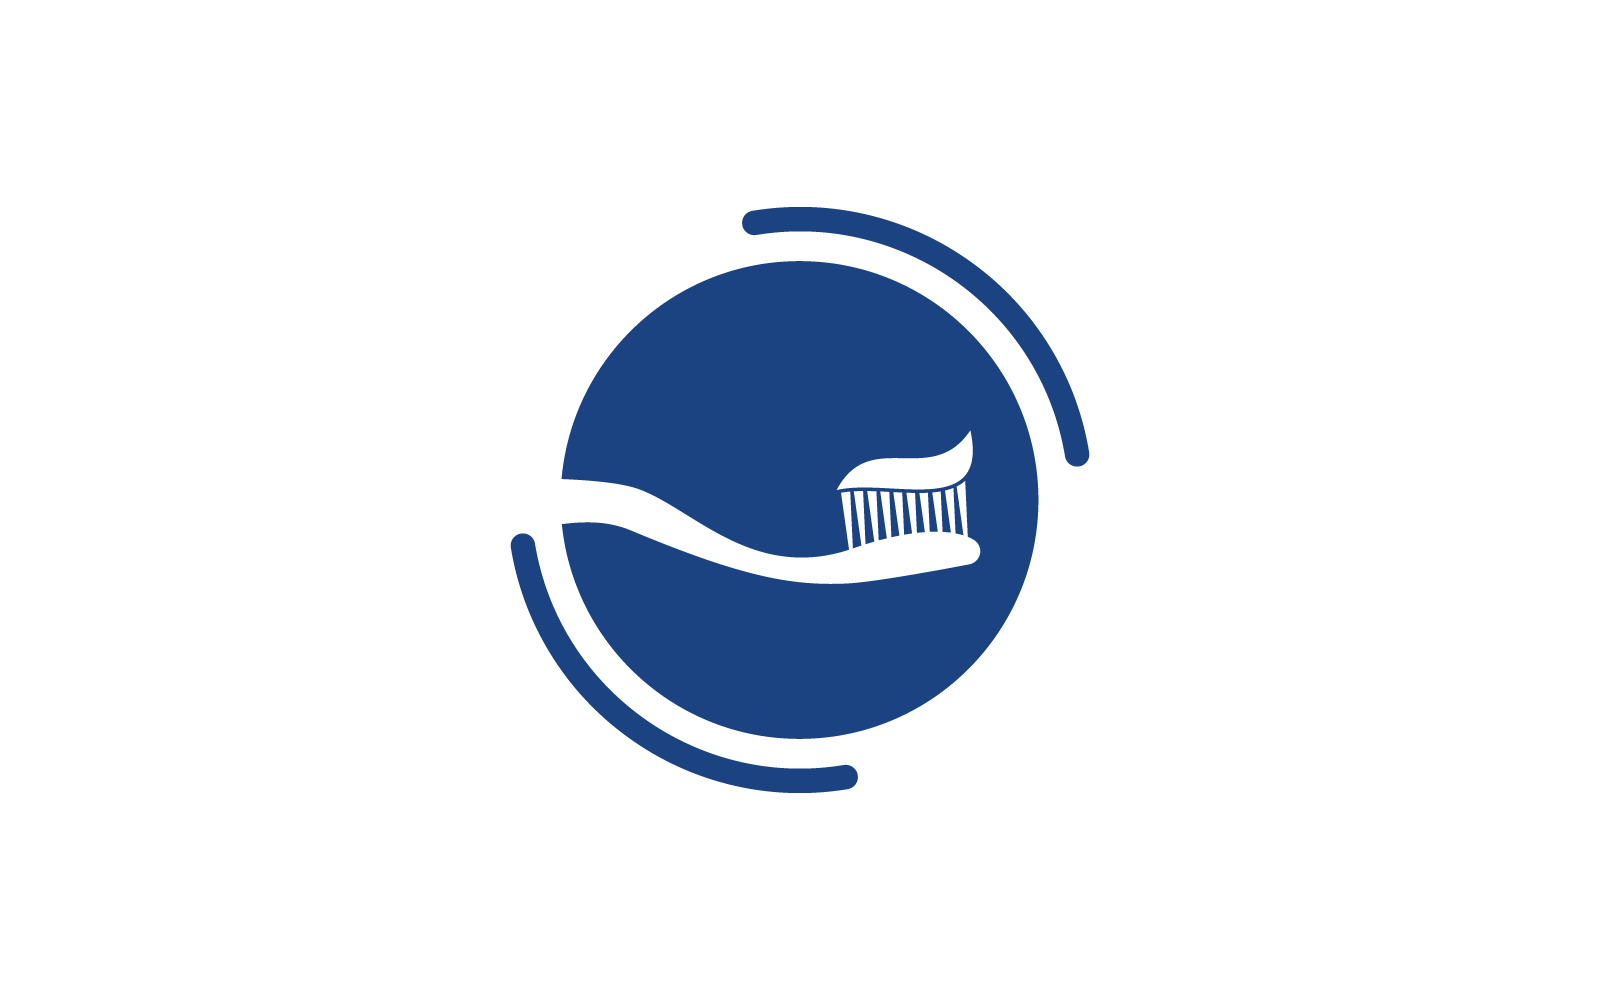 Toothbrush logo illustration flat design vector template